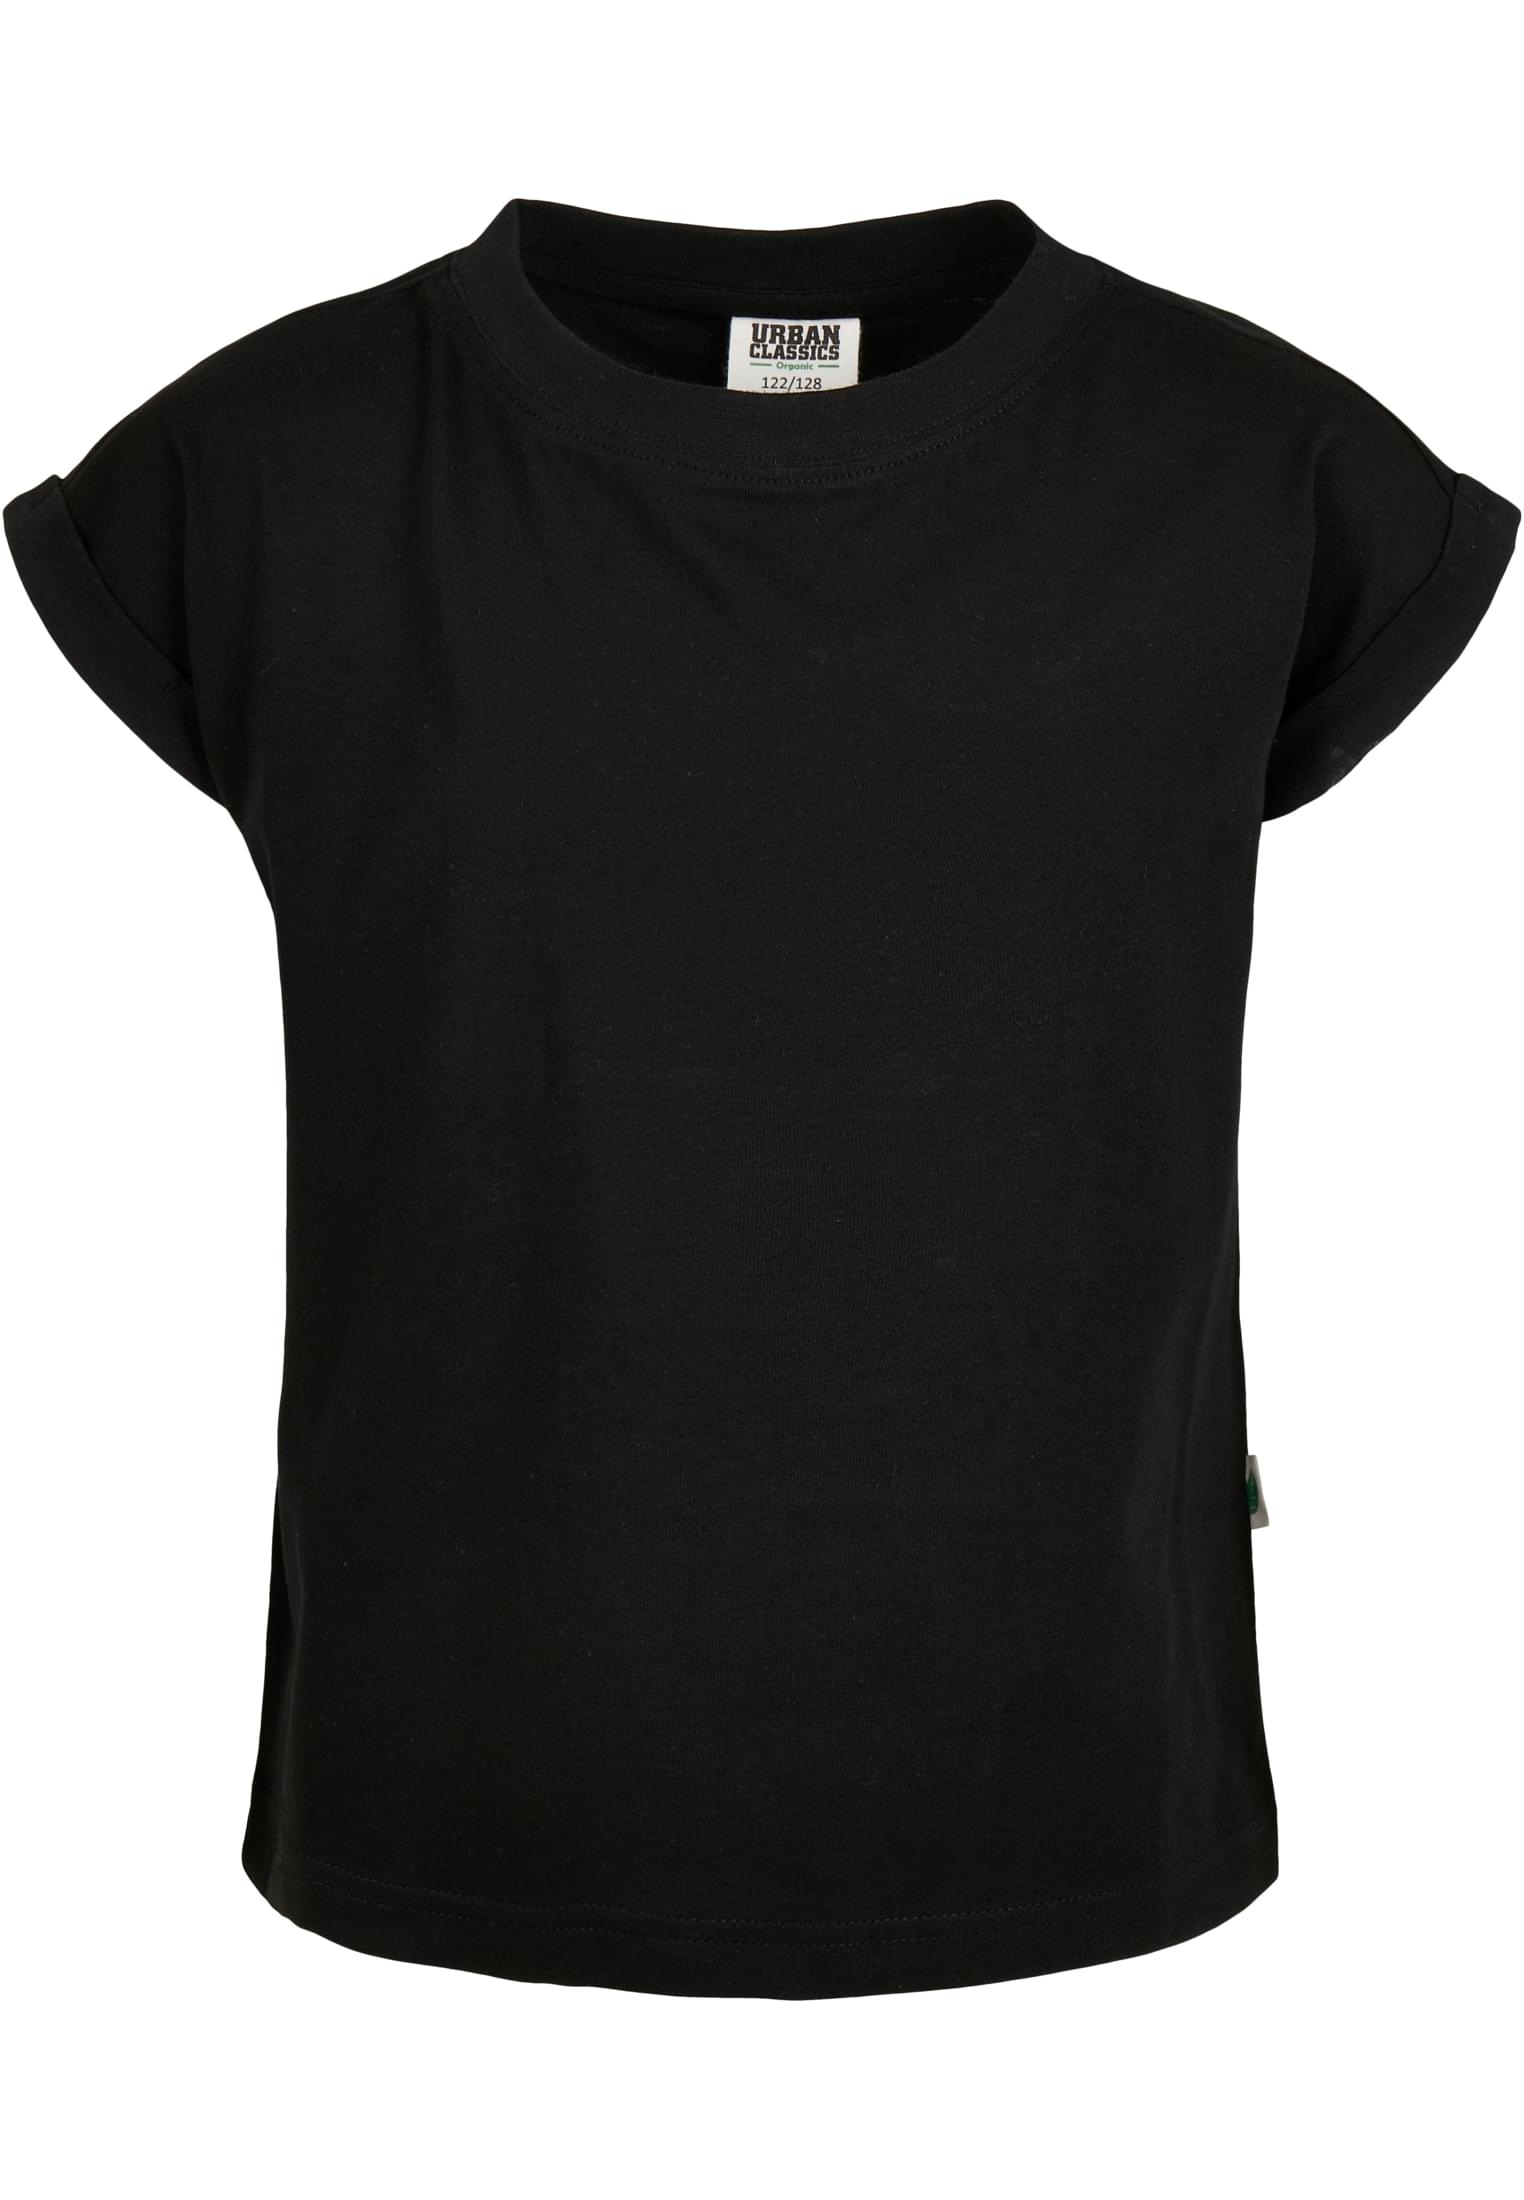 | Shoulder online T-Shirt (1 Organic Tee«, tlg.) bestellen »Kinder CLASSICS Extended Girls URBAN BAUR